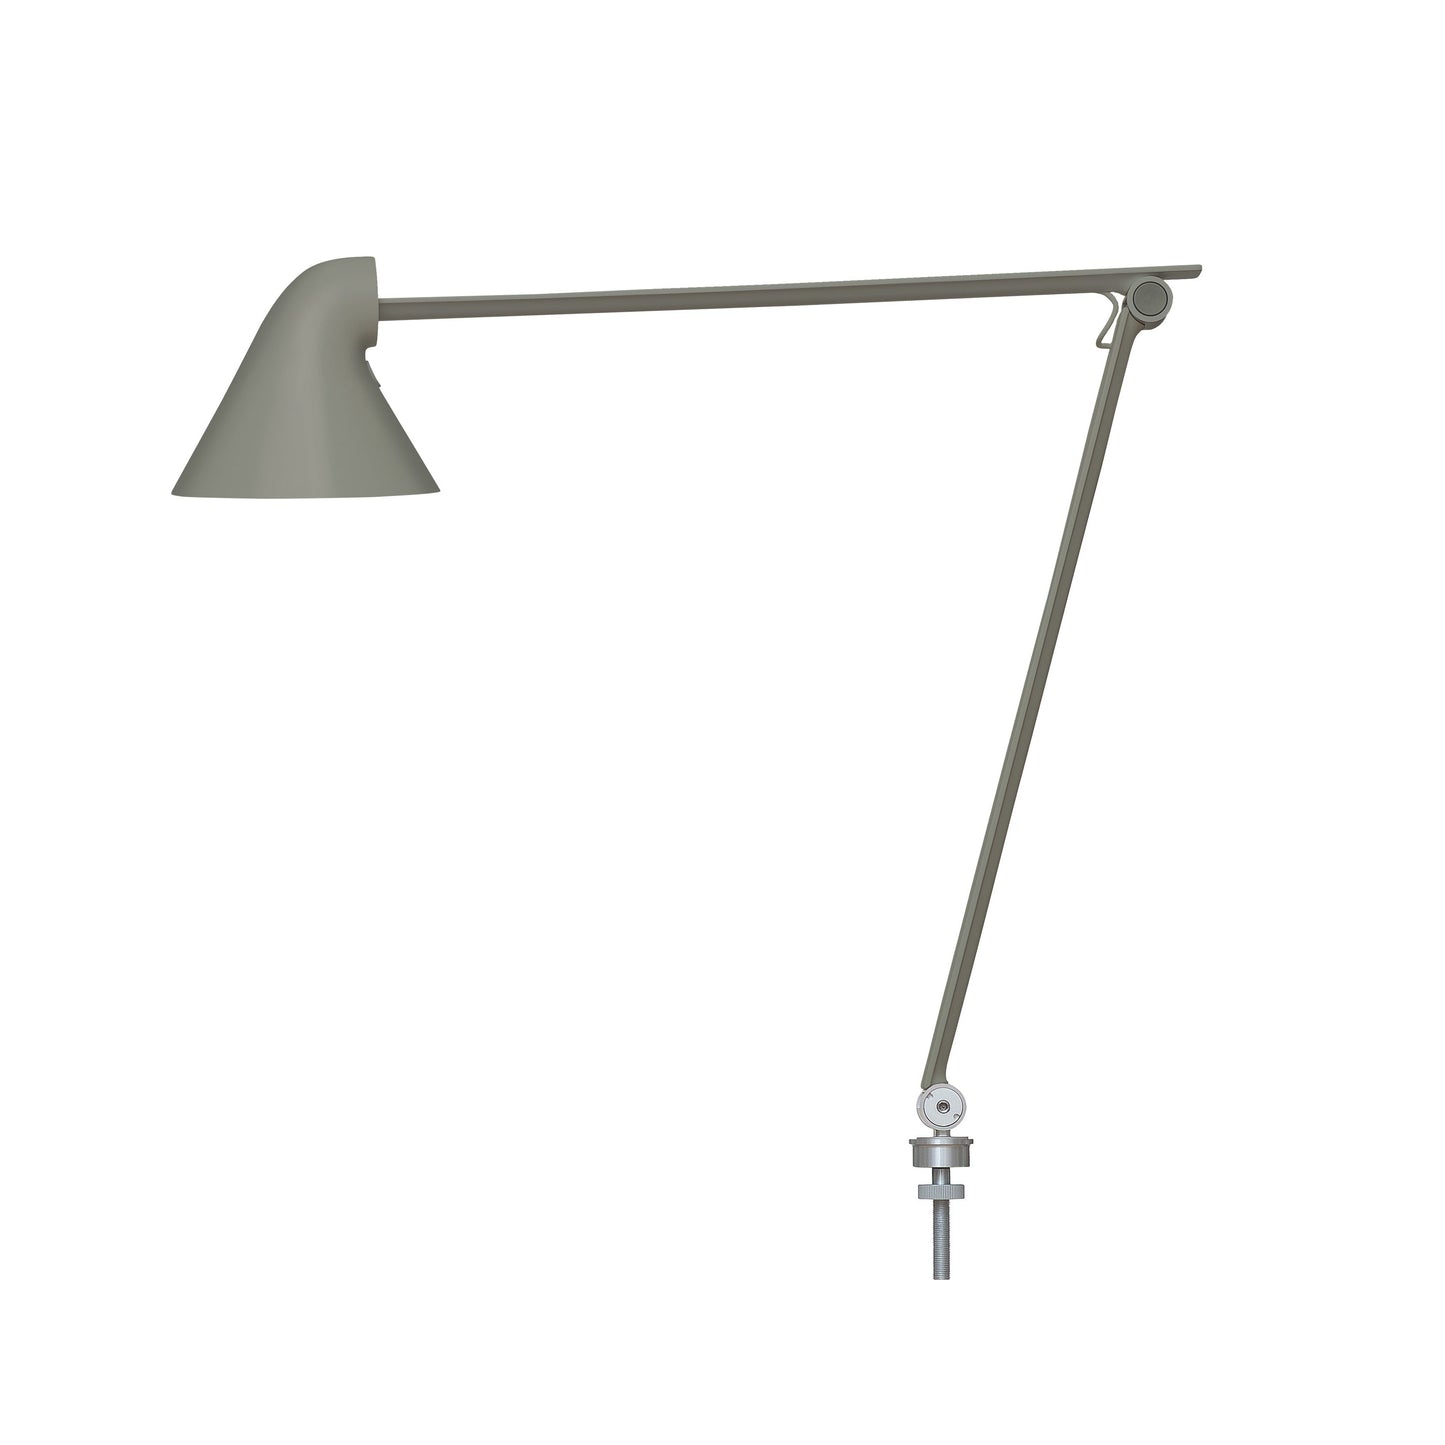 NJP Table Lamp